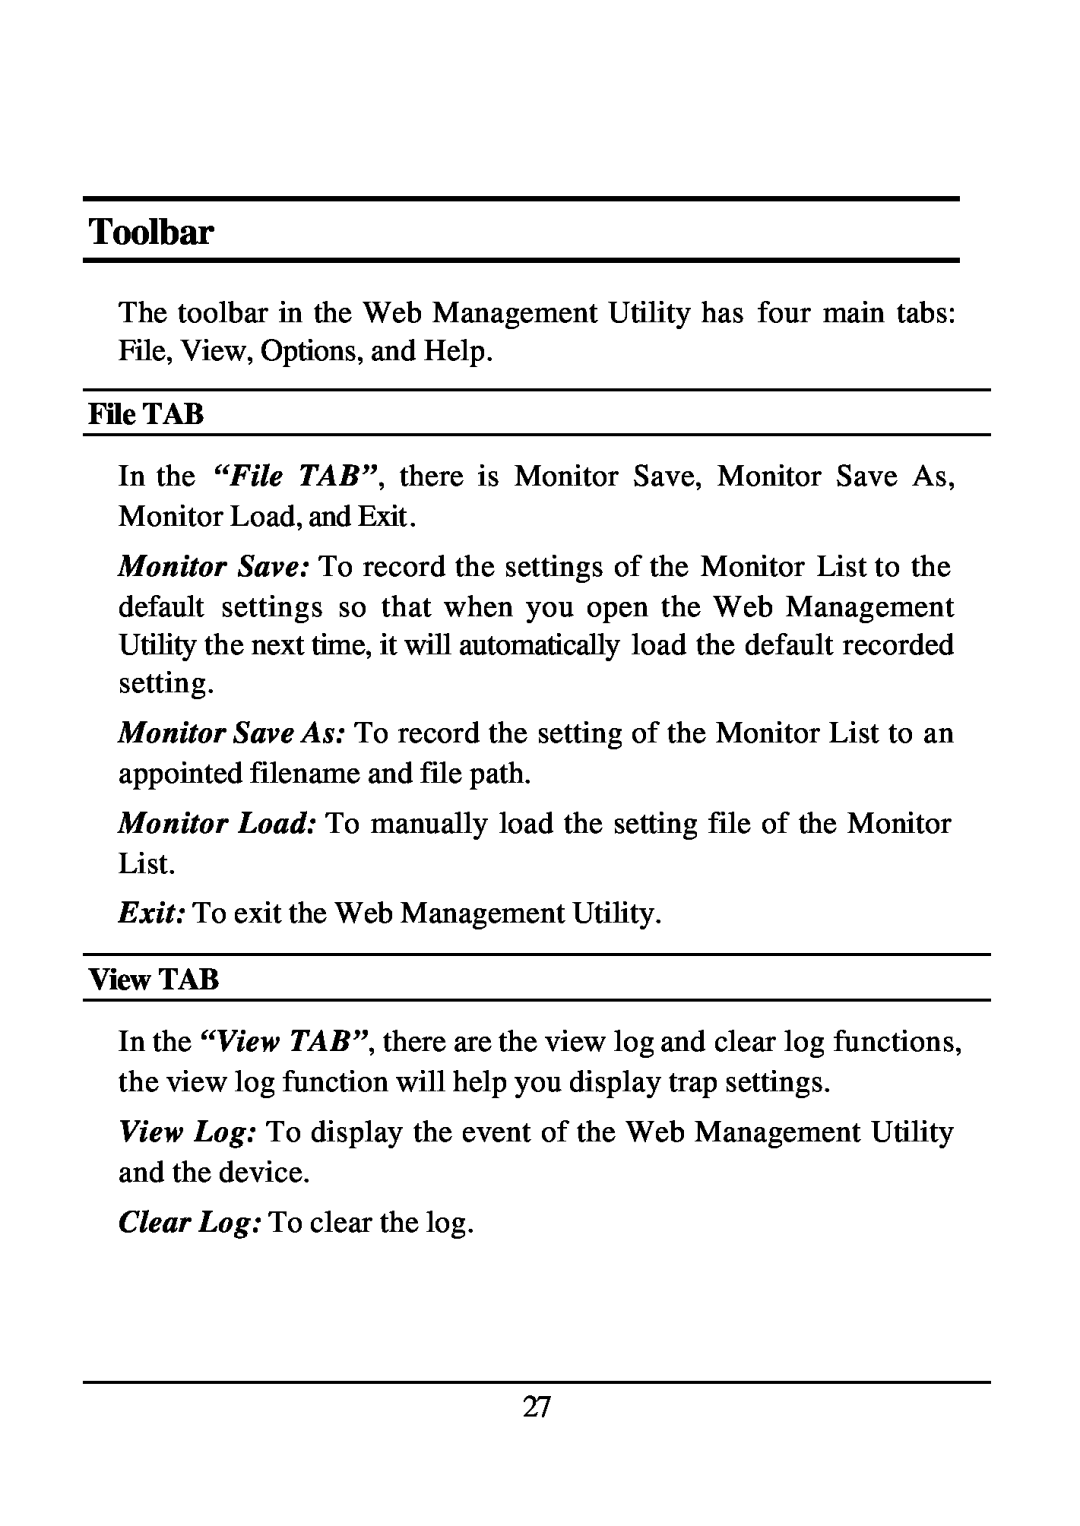 D-Link DES-1526 manual Toolbar, File TAB, View TAB 